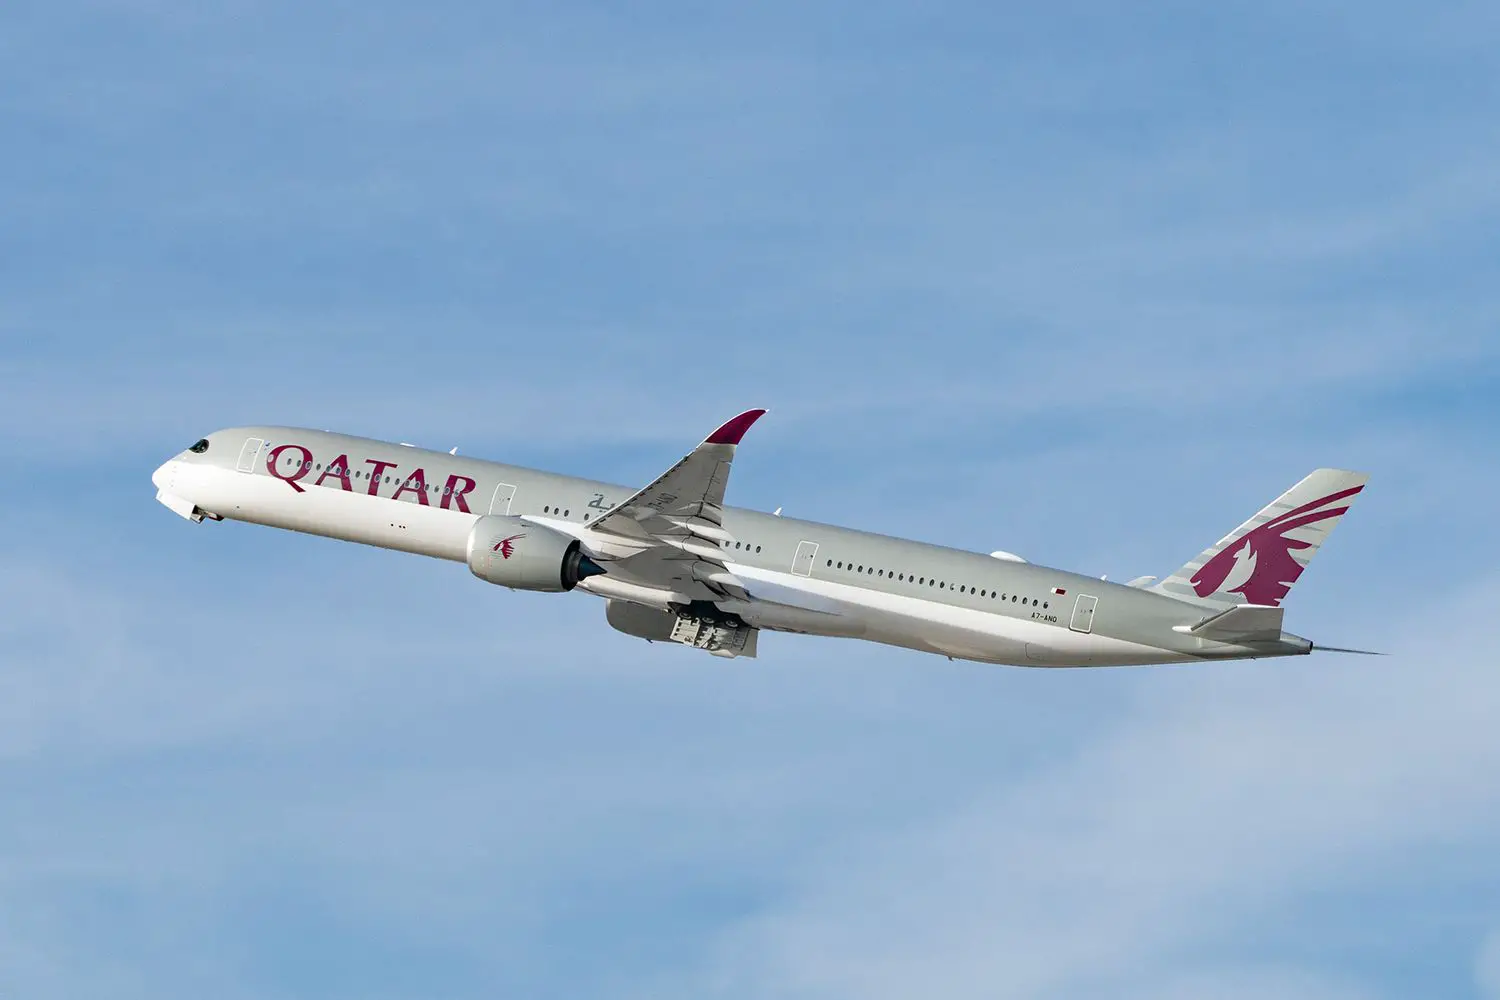 qatar-airways-plane-QATARBISLITE0921-2209513750bf40e89cdf6d50fcab40a3